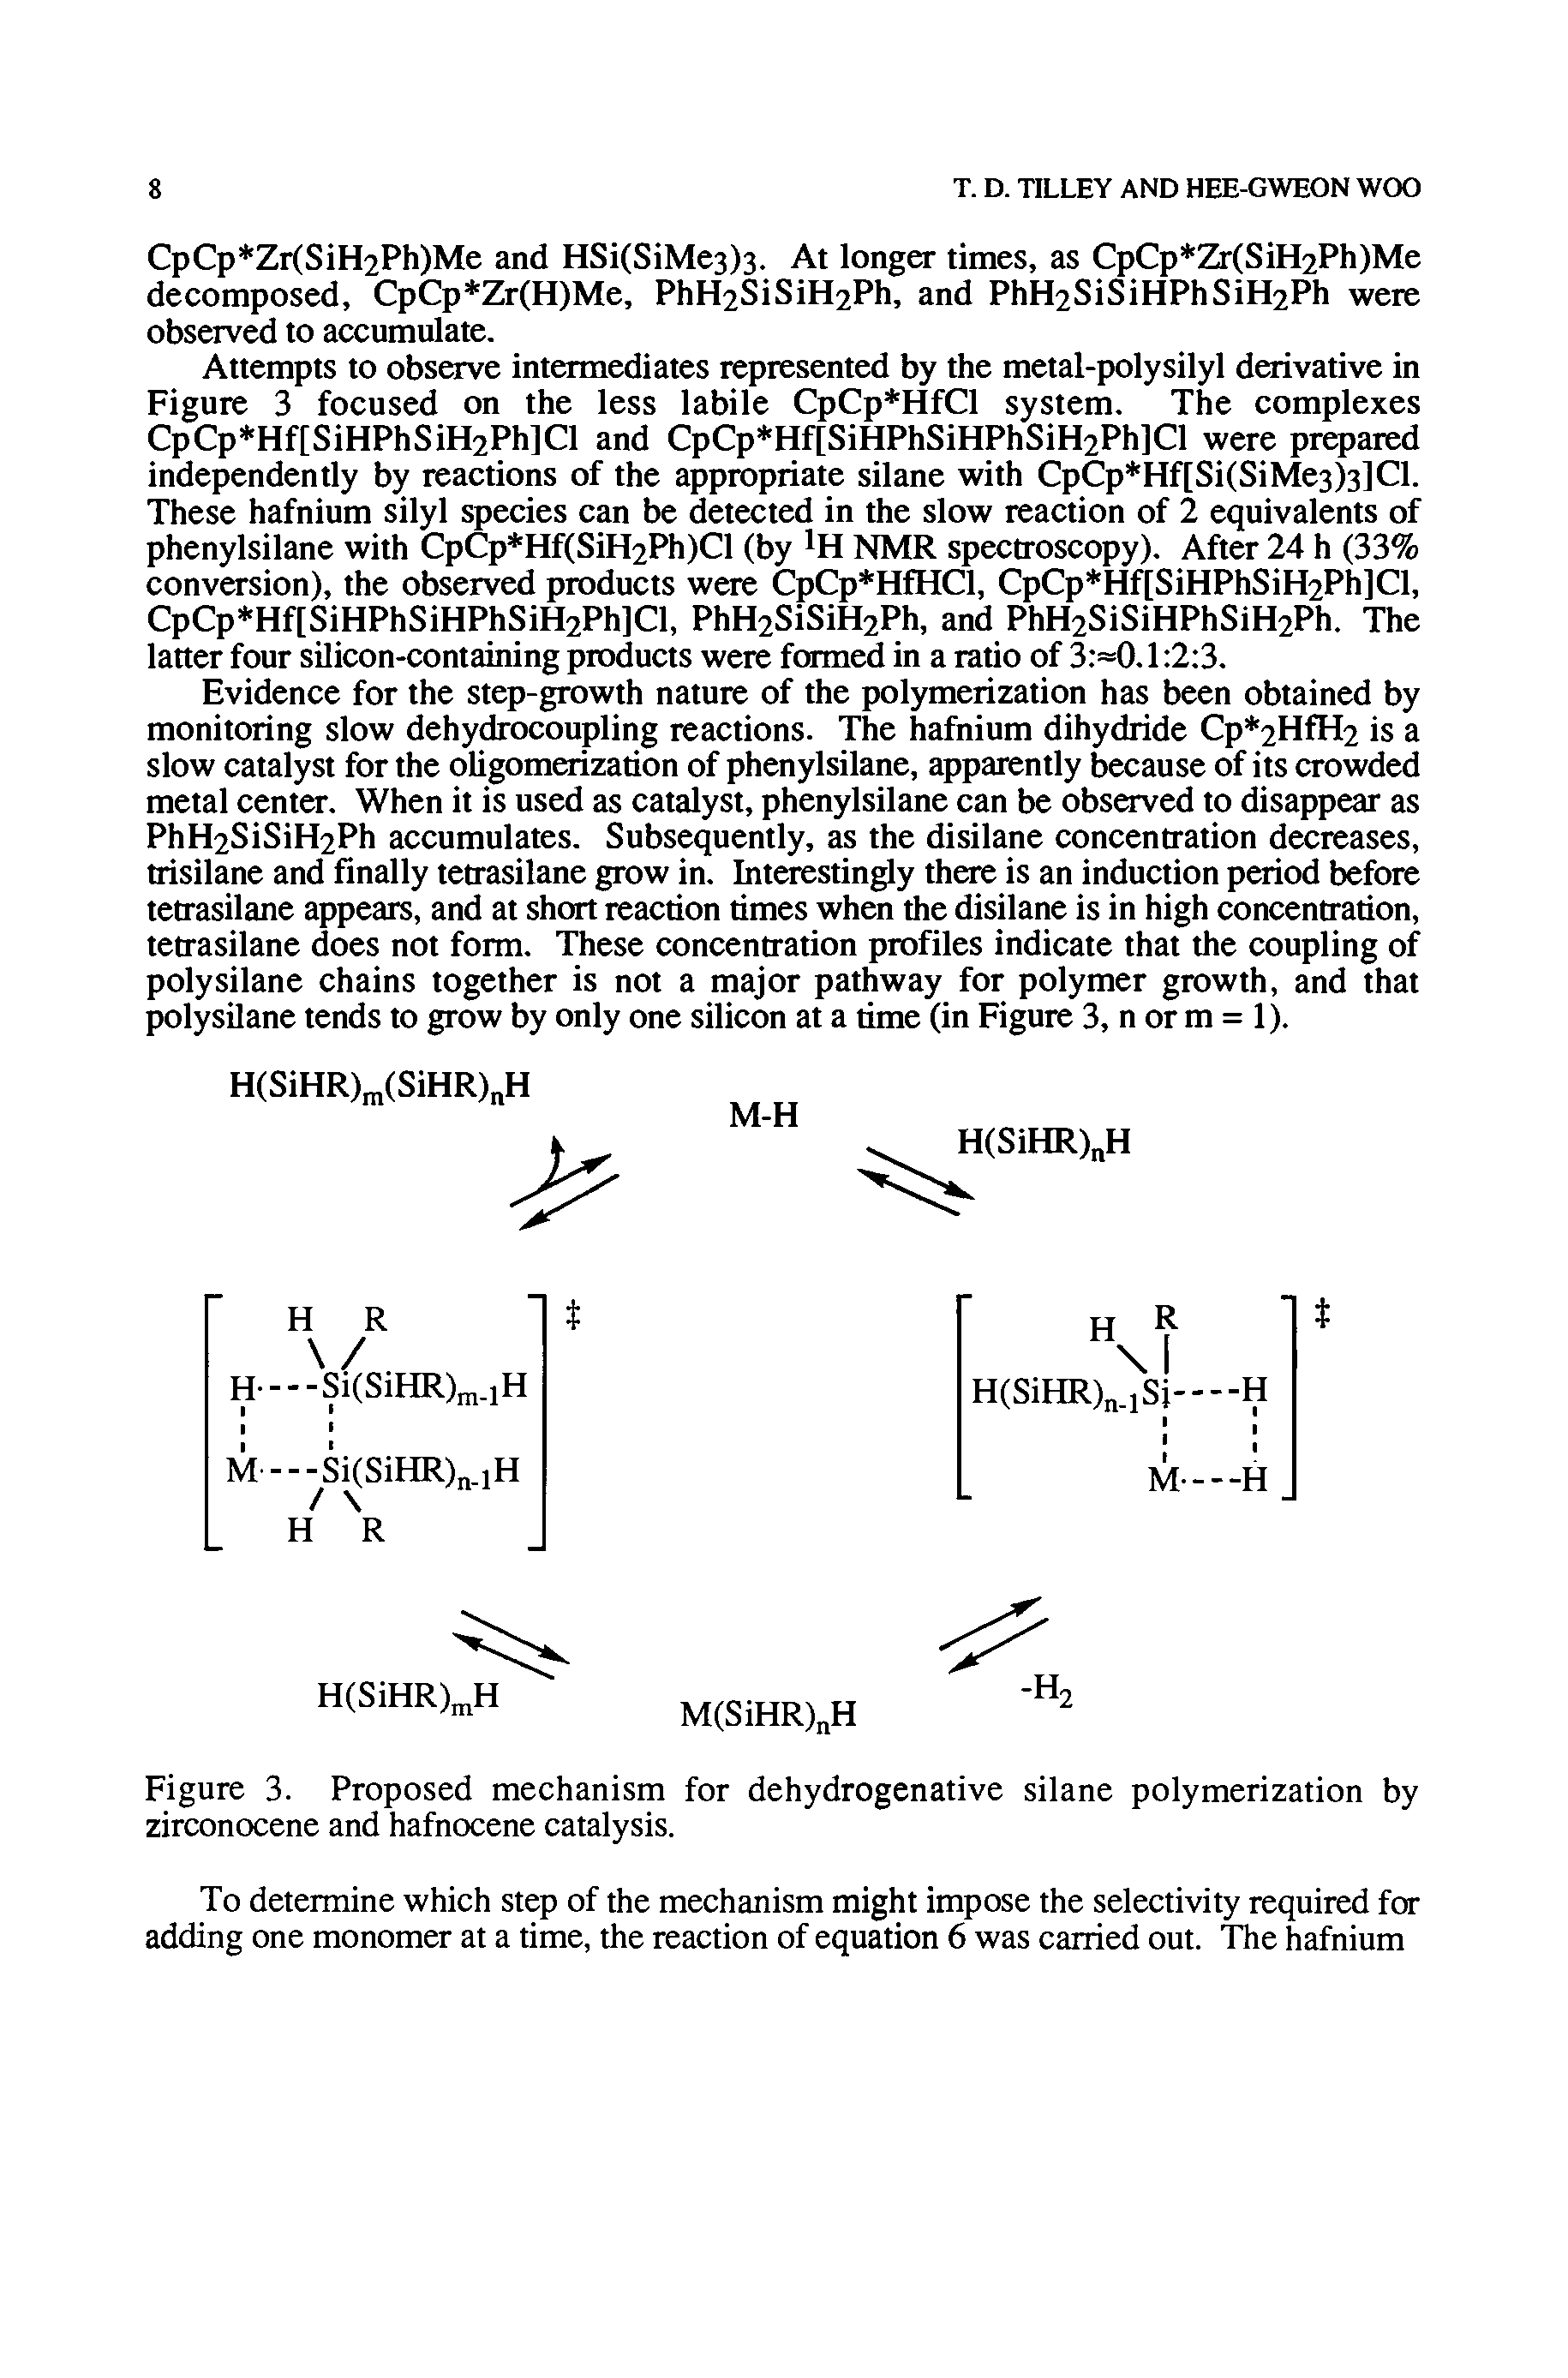 Figure 3. Proposed mechanism for dehydrogenative silane polymerization by zirconocene and hafnocene catalysis.